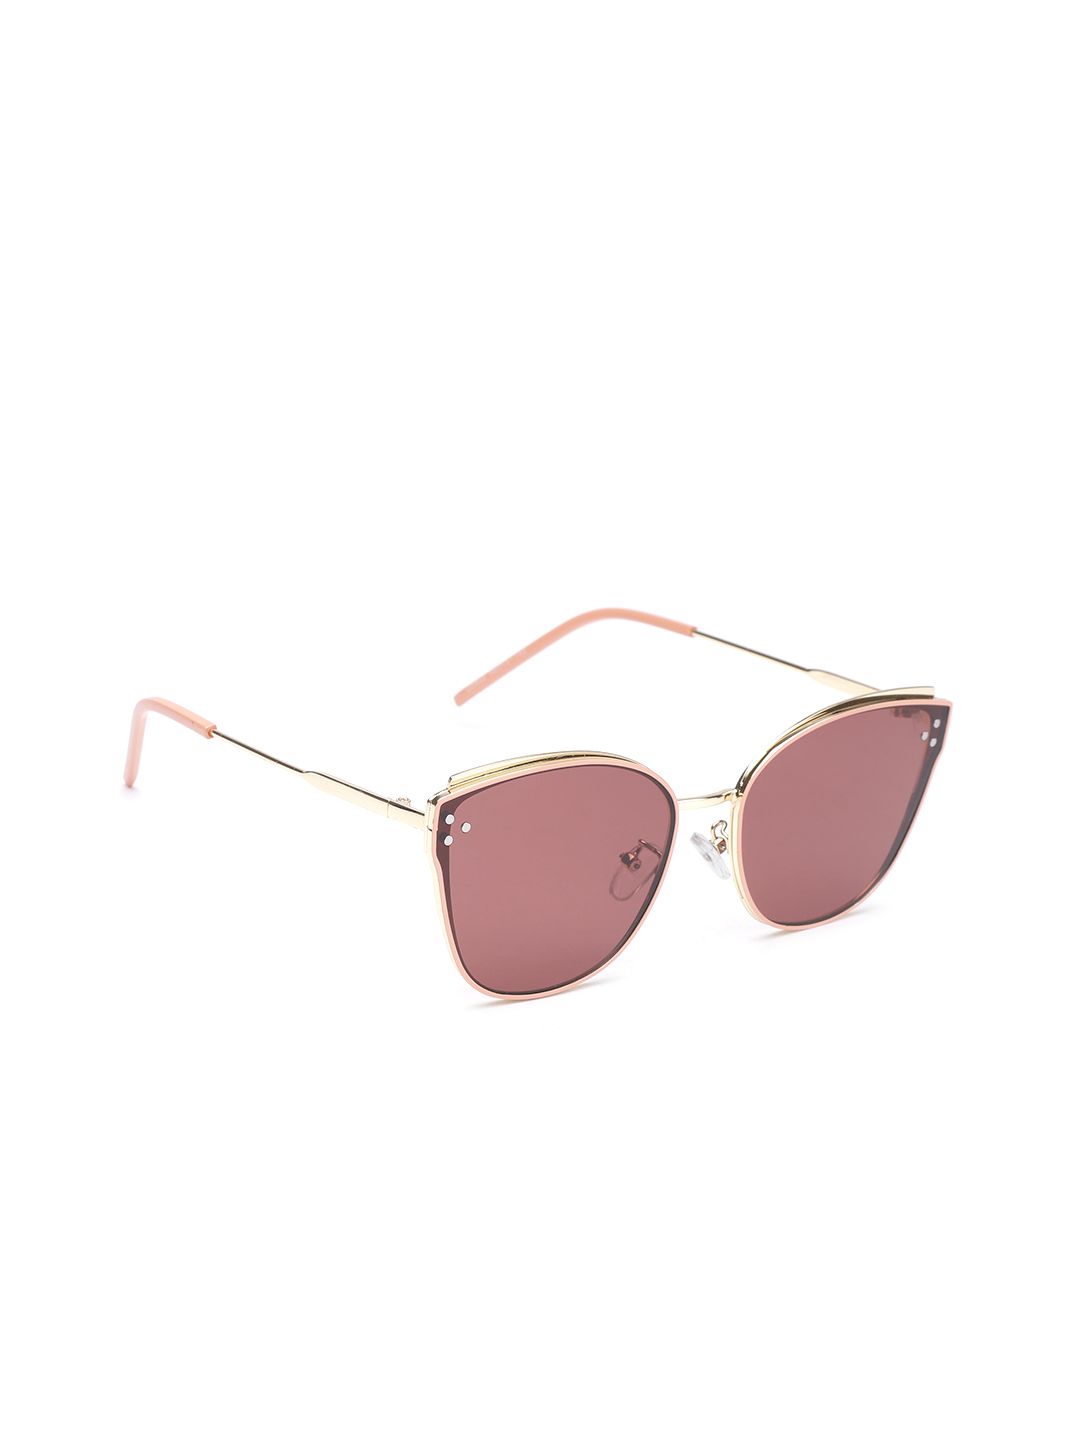 Voyage Women Cateye Sunglasses 5852MG2861 Price in India